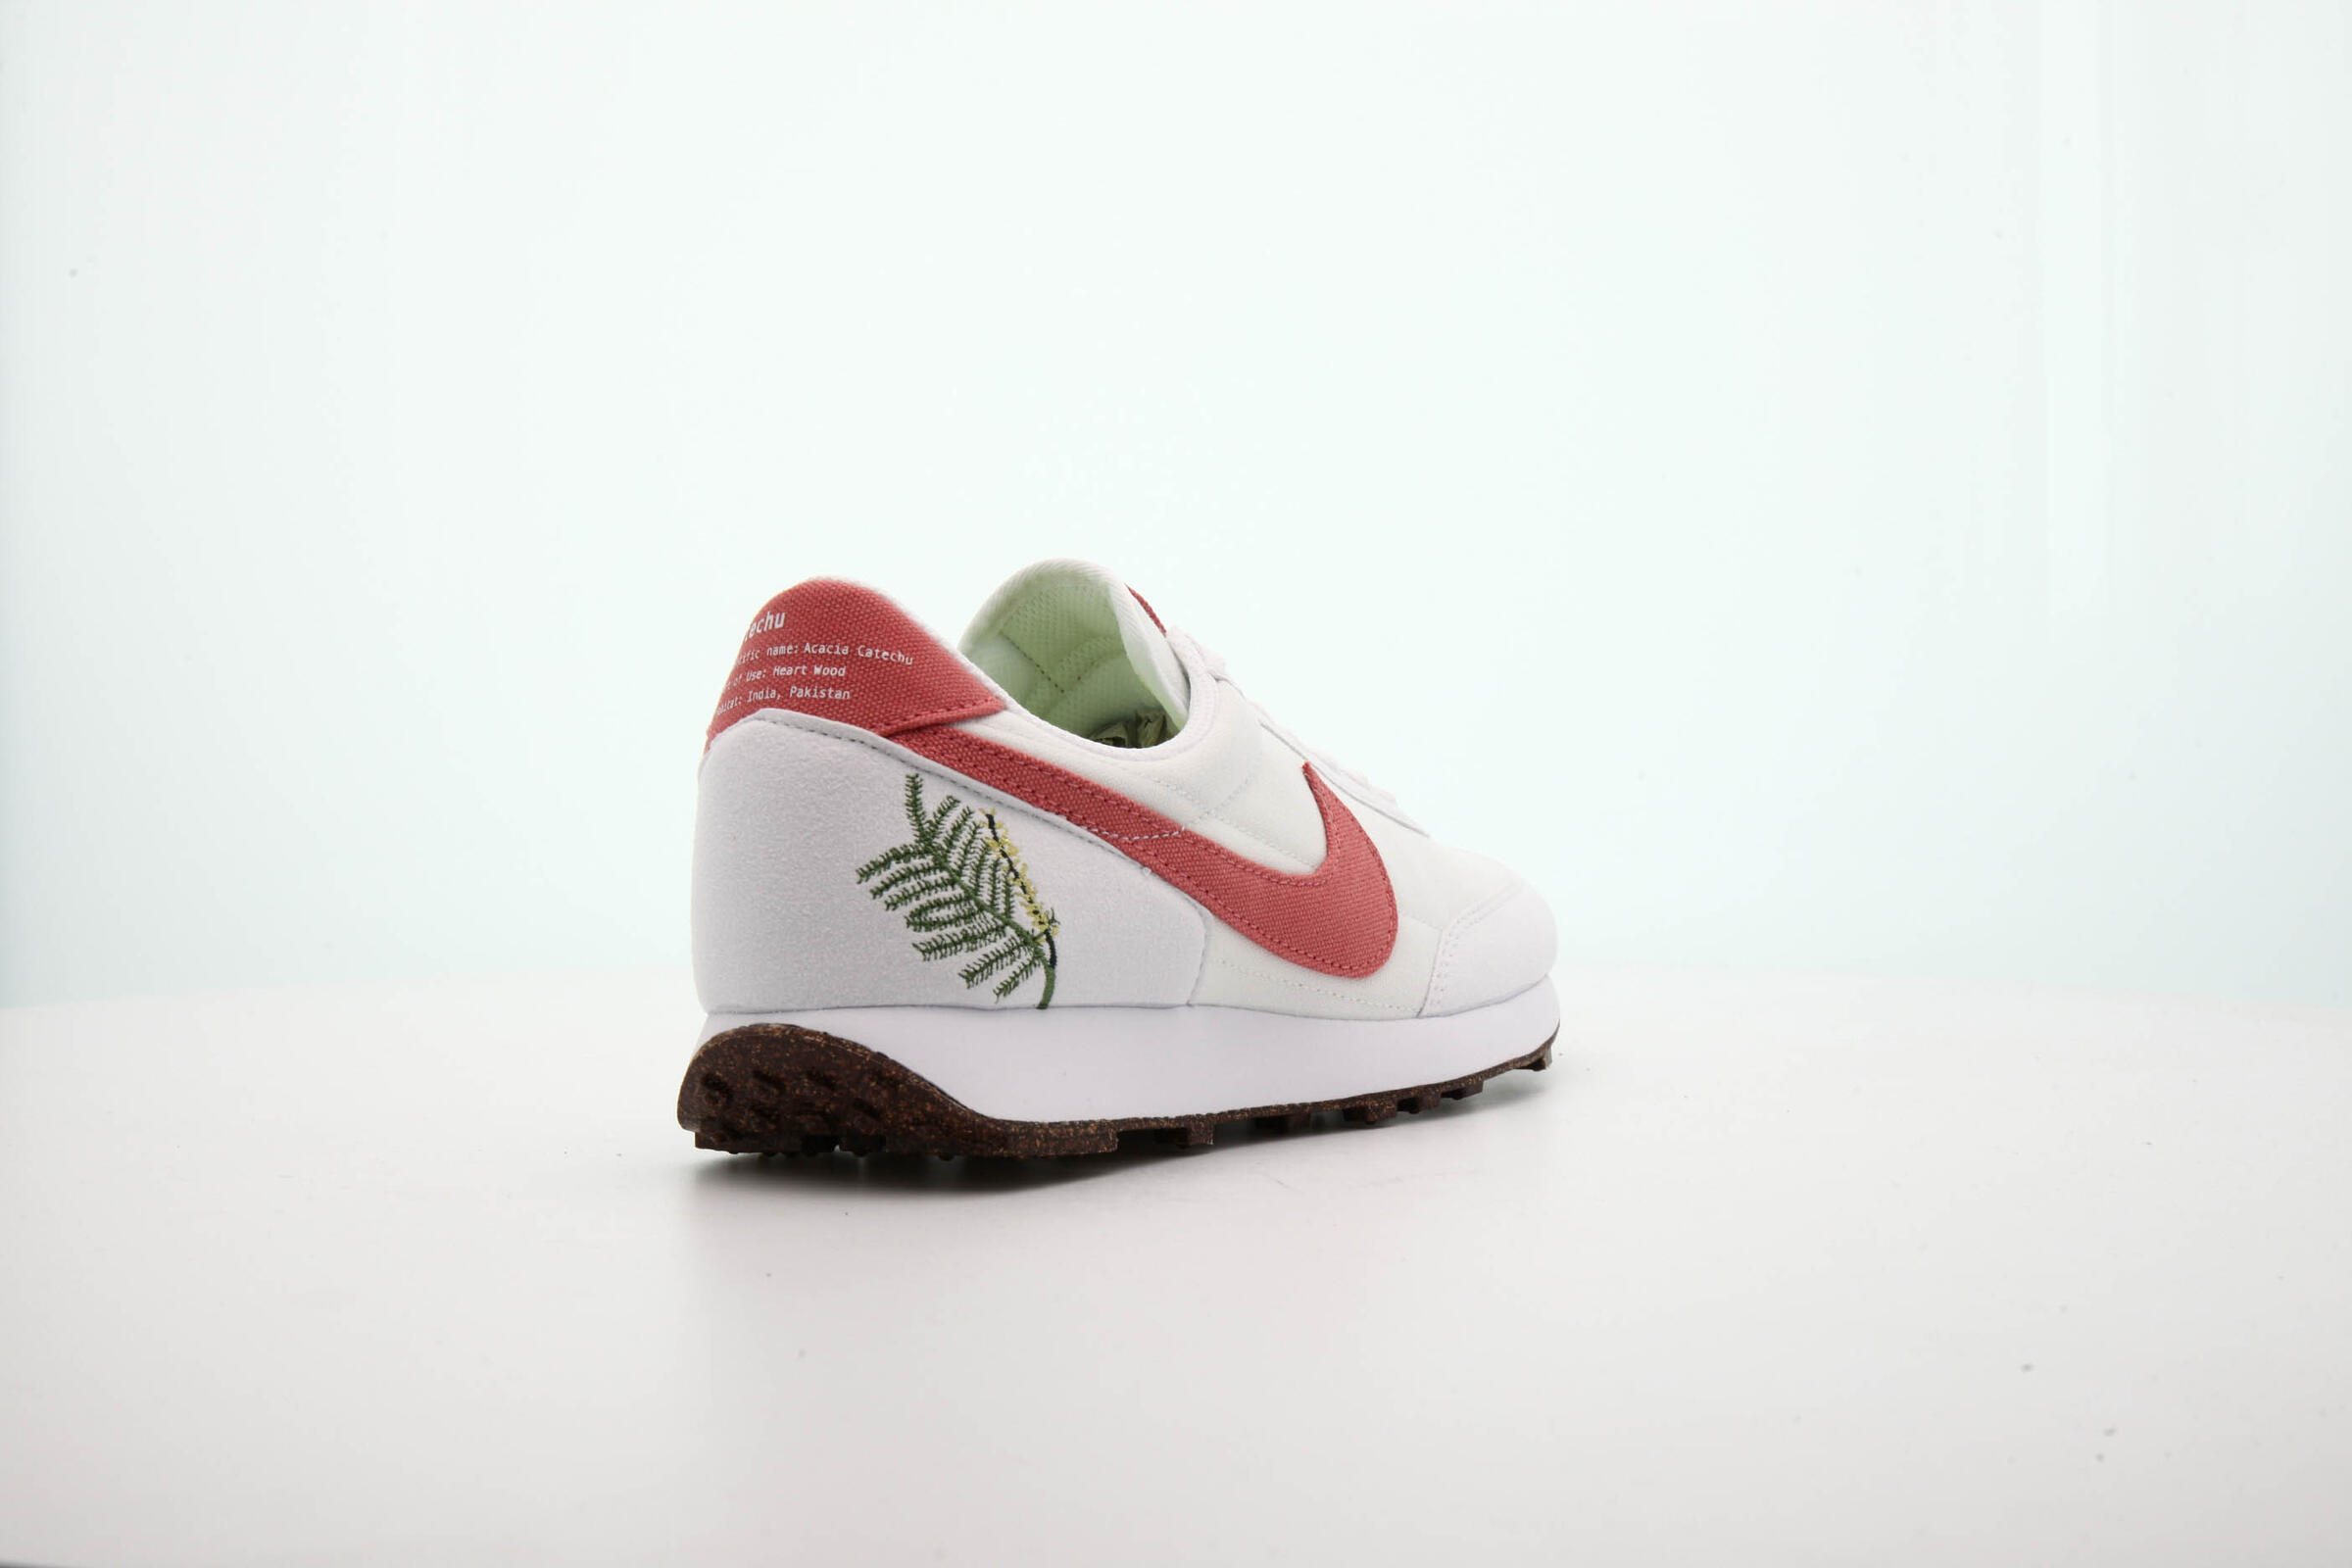 Nike WMNS DBREAK SE "PLANT CORK PACK"